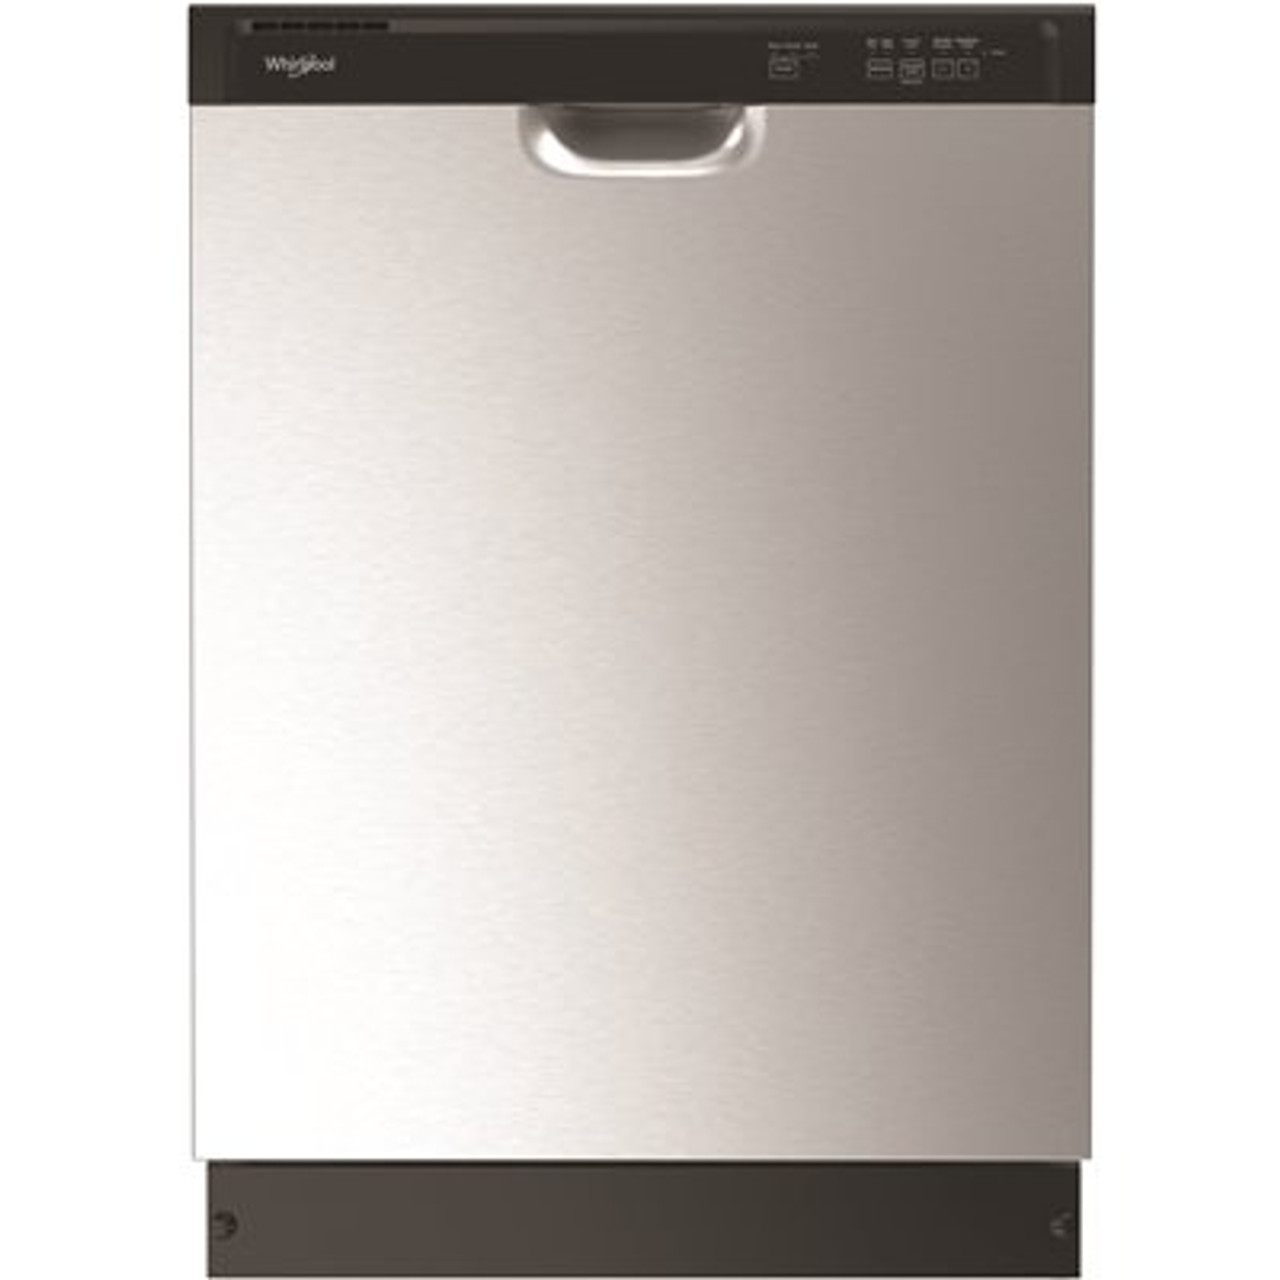 Quiet Dishwasher With Heat Dry